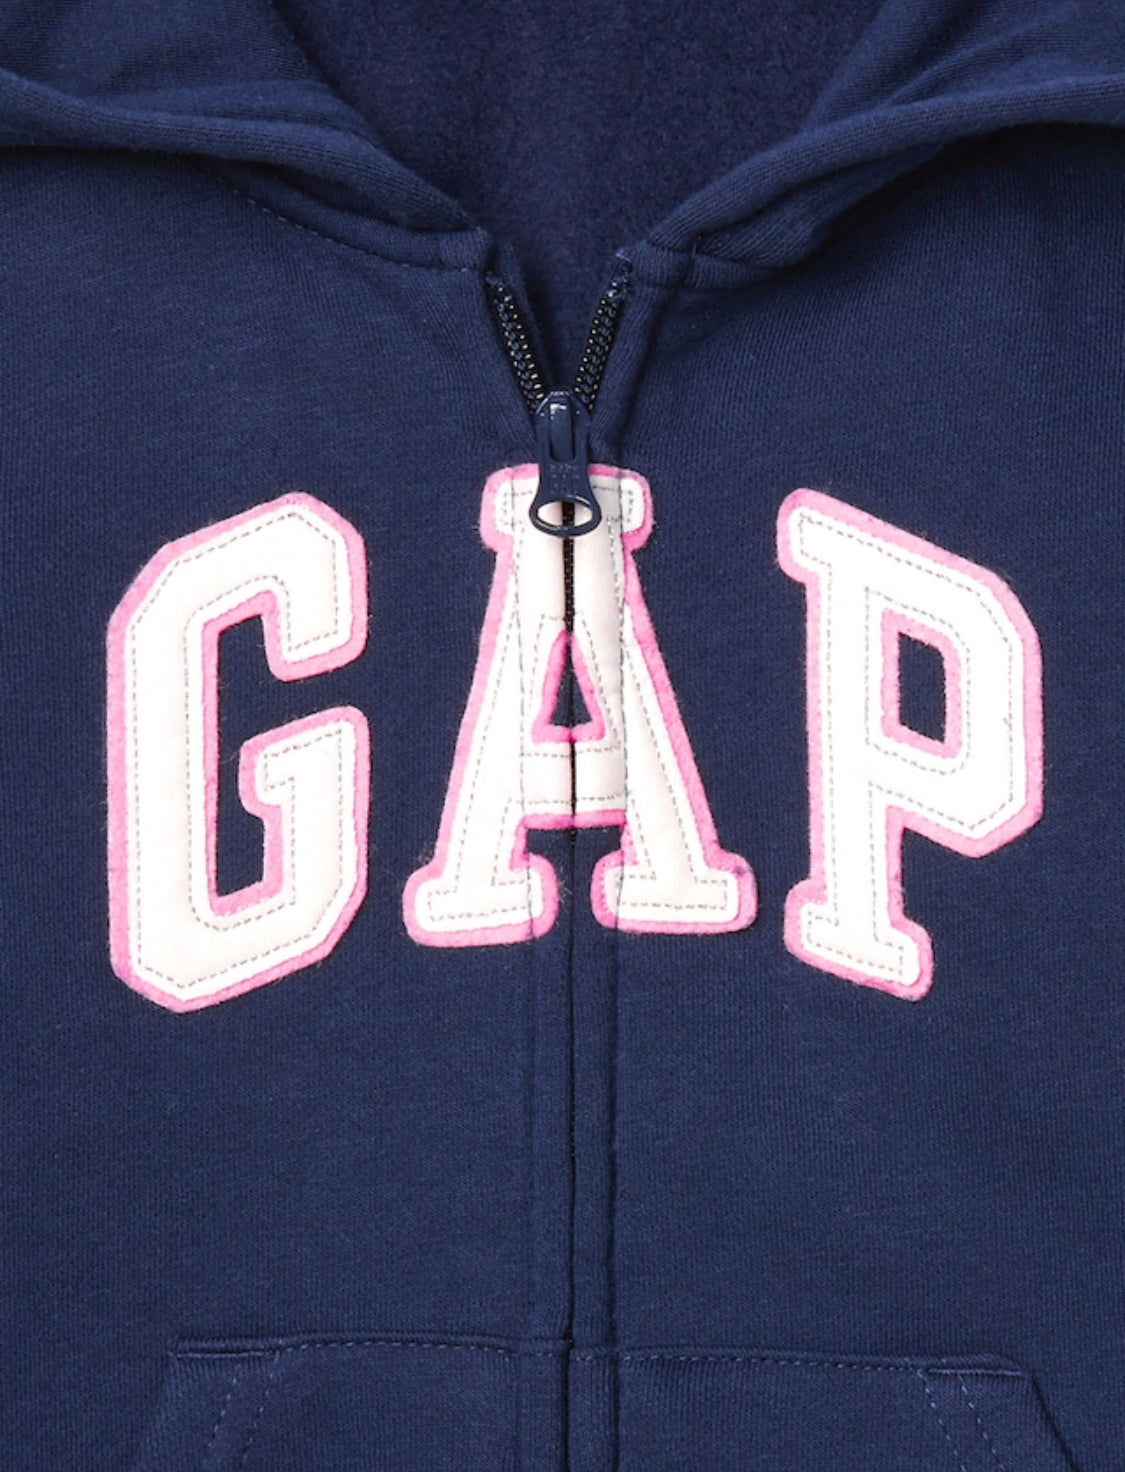 gap baby jacket girl